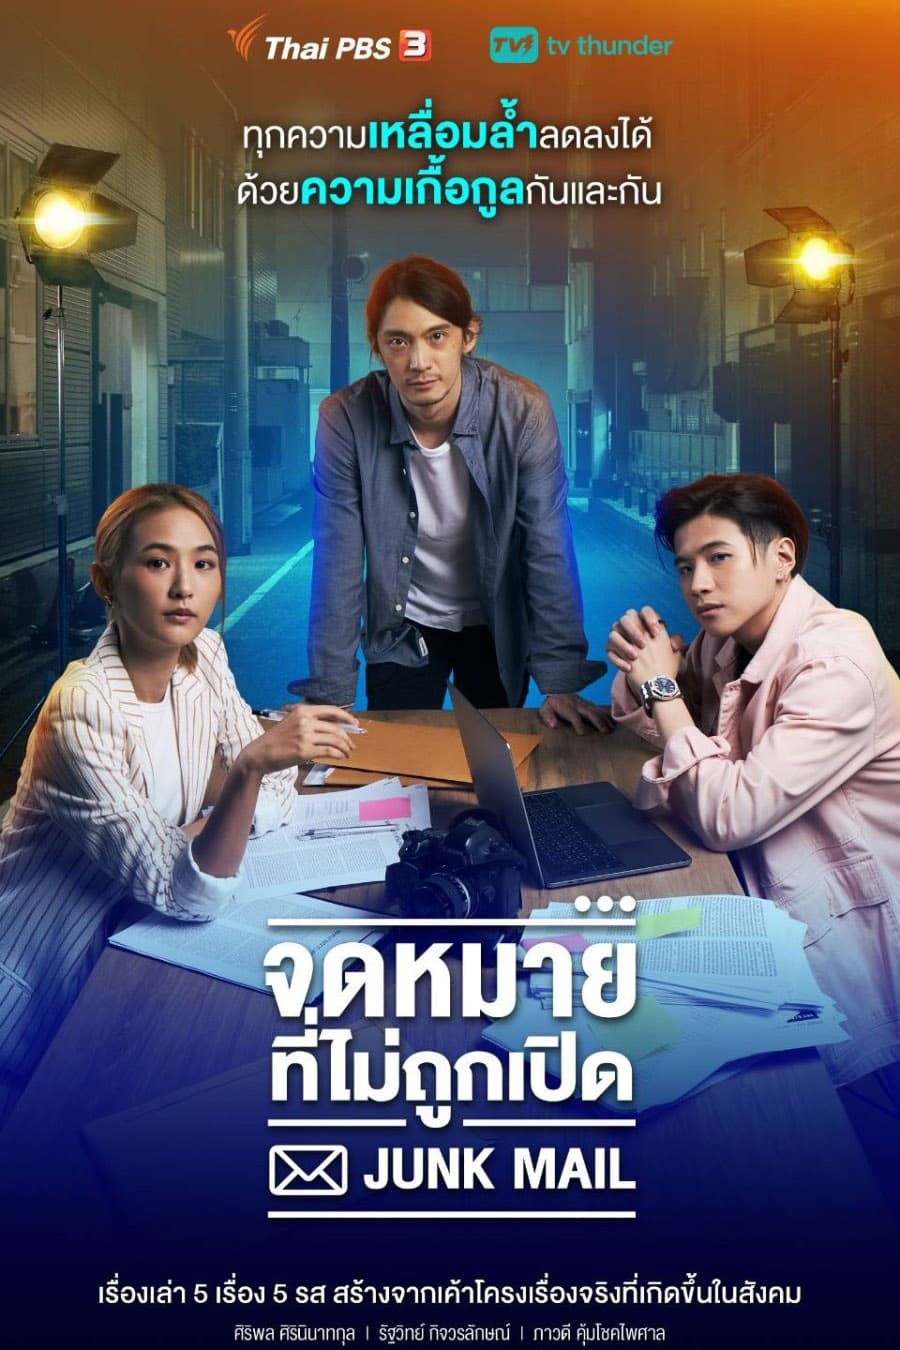 TV ratings for Junk Mail (จดหมายที่ไม่ถูกเปิด) in Japan. Thai PBS TV series